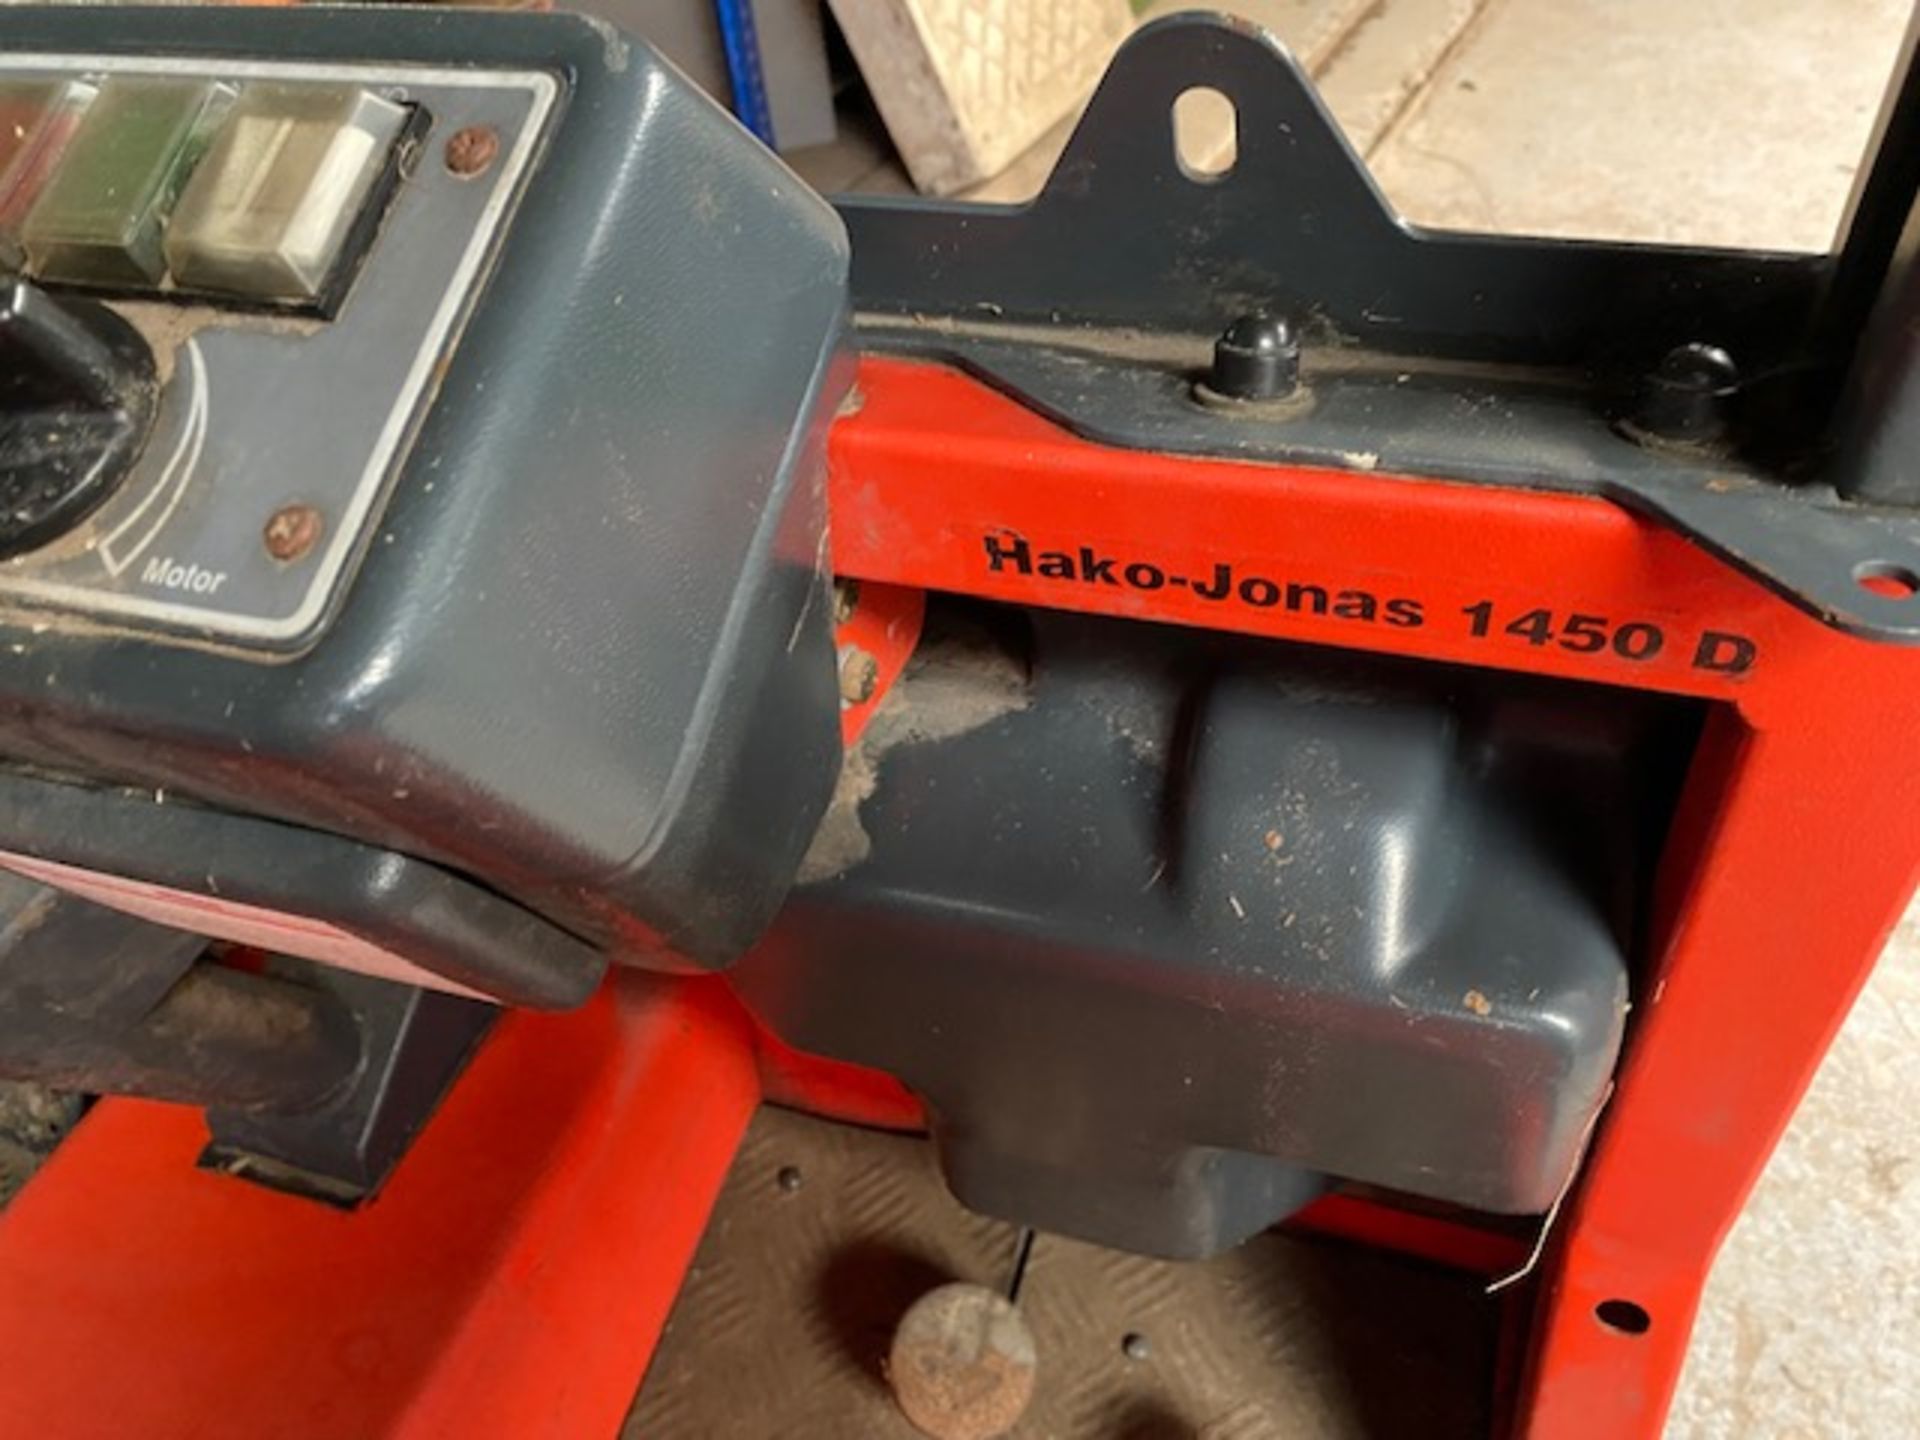 Hako Jonas Model 1450 D Ride On Sweeper - Image 5 of 7